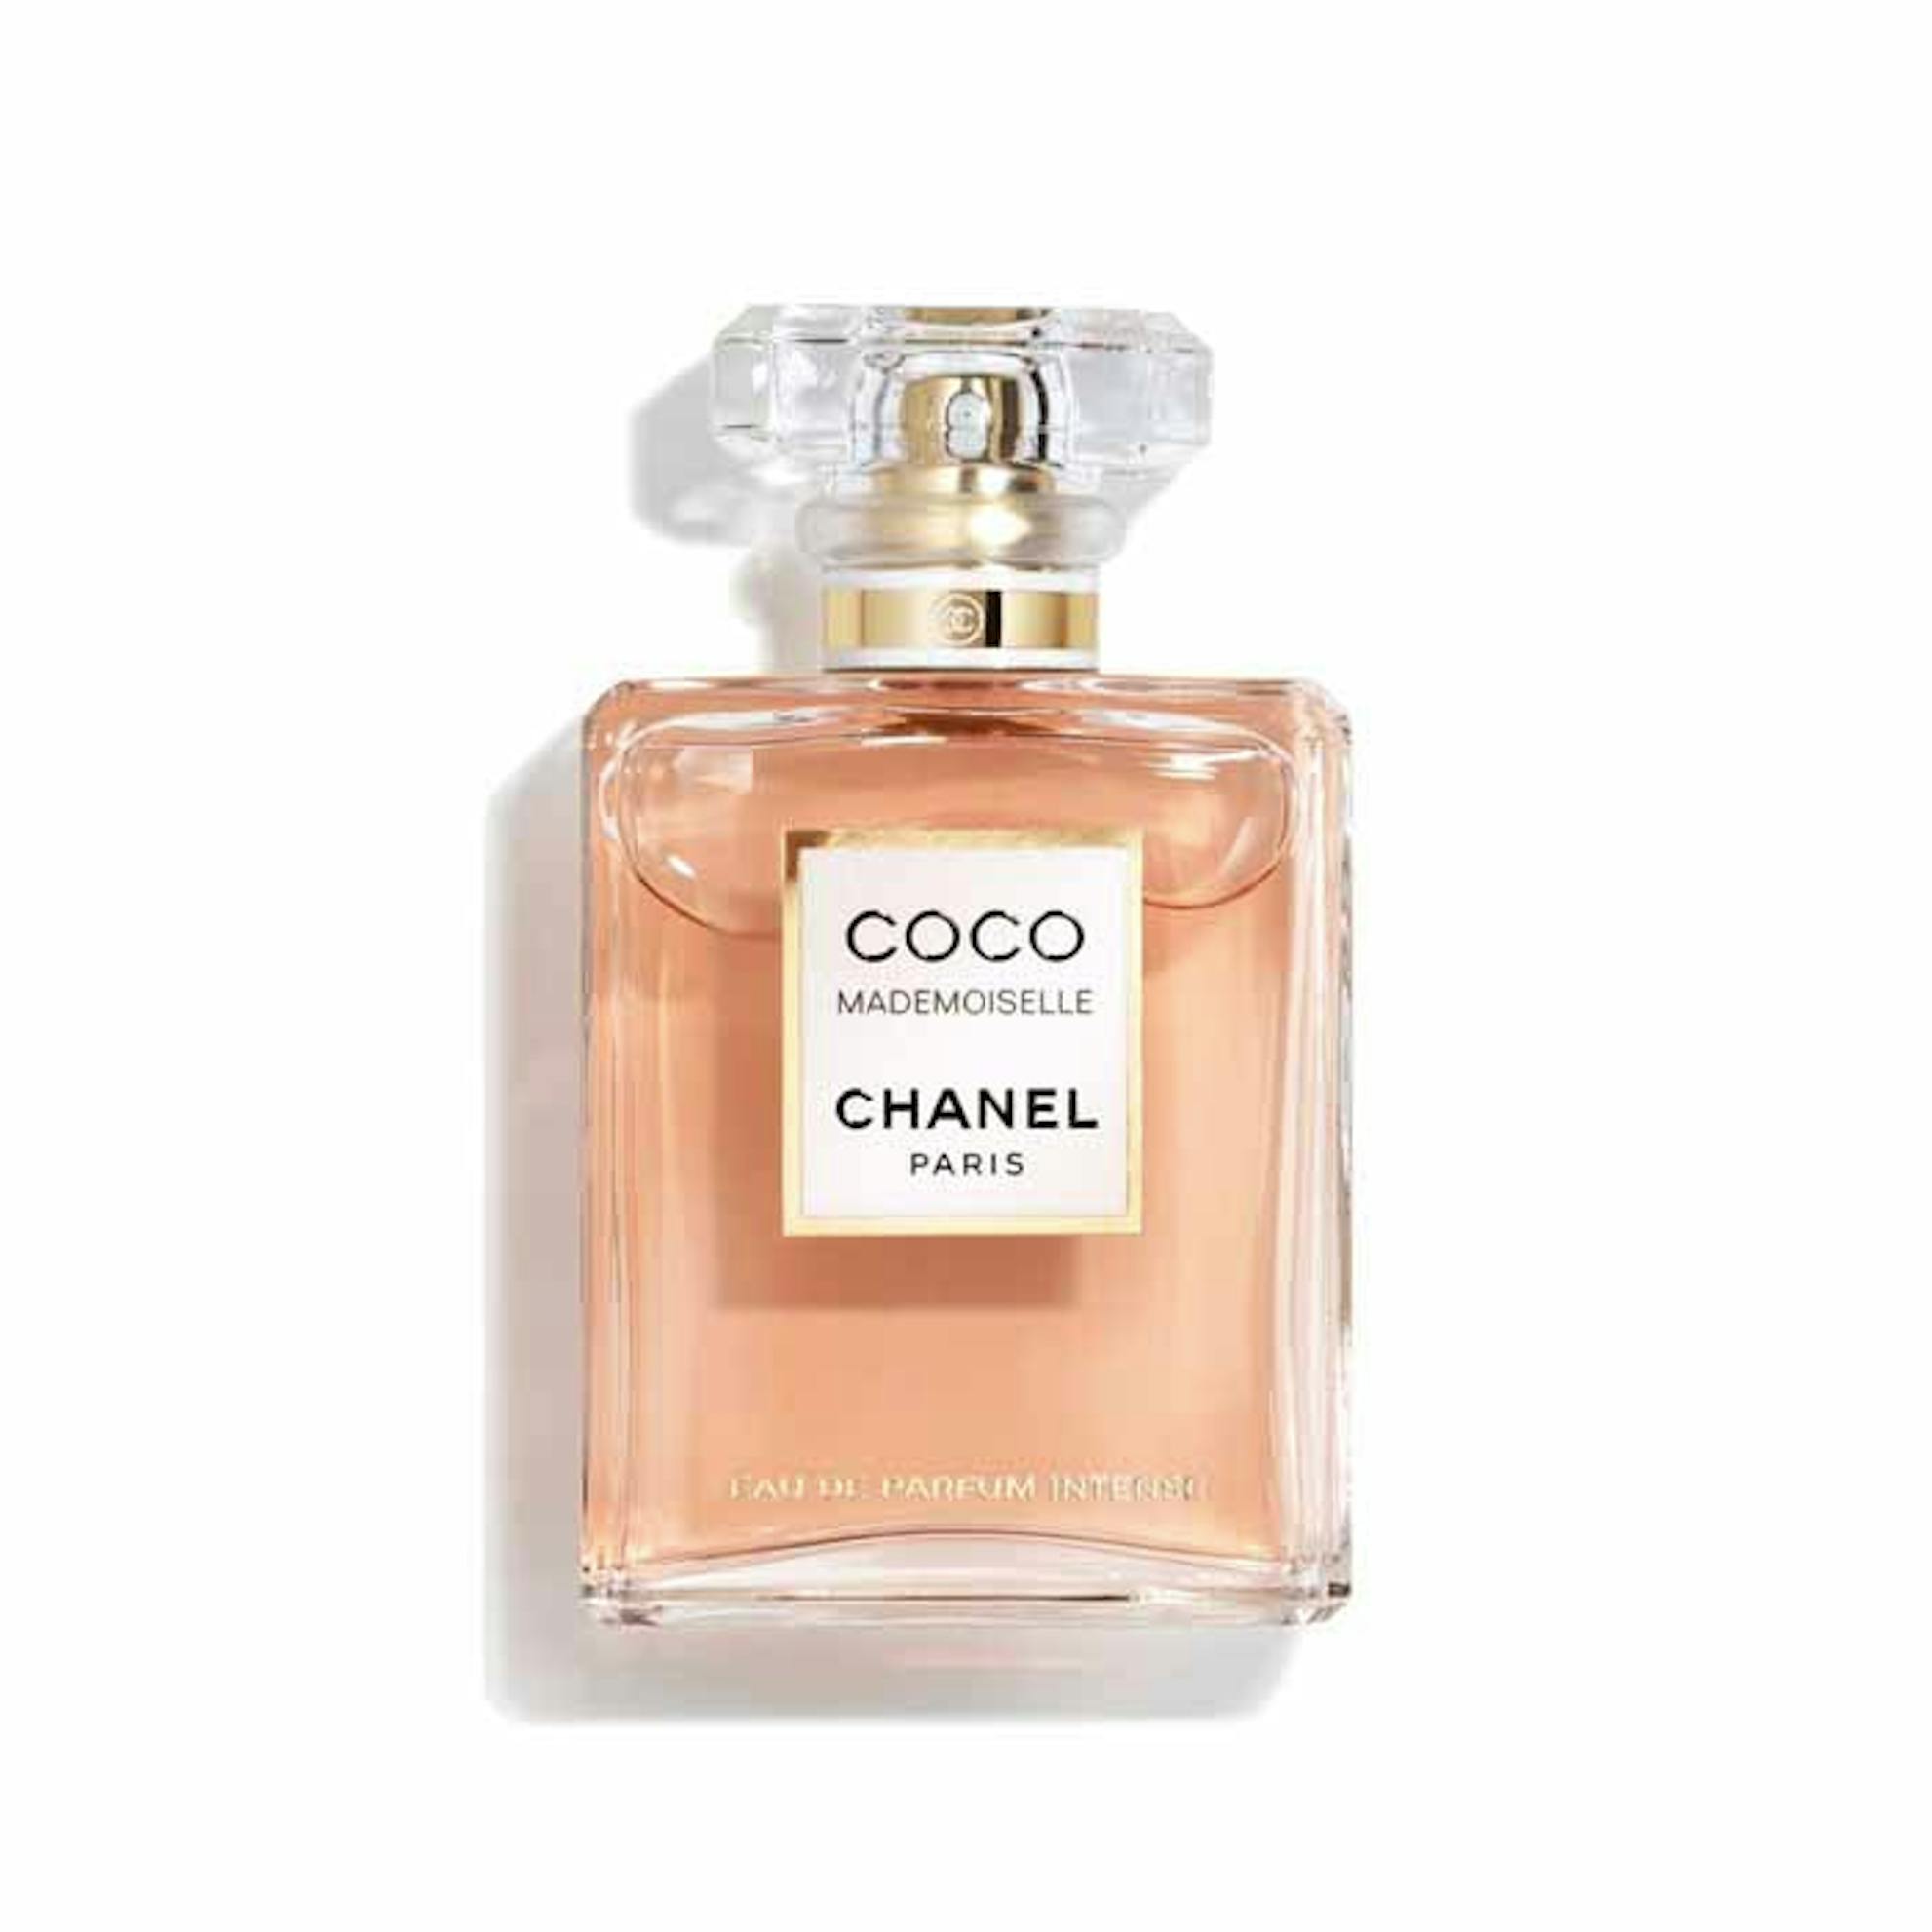 CHANEL Coco Mademoiselle 100ml  CHANEL Eau De Parfum Intense for